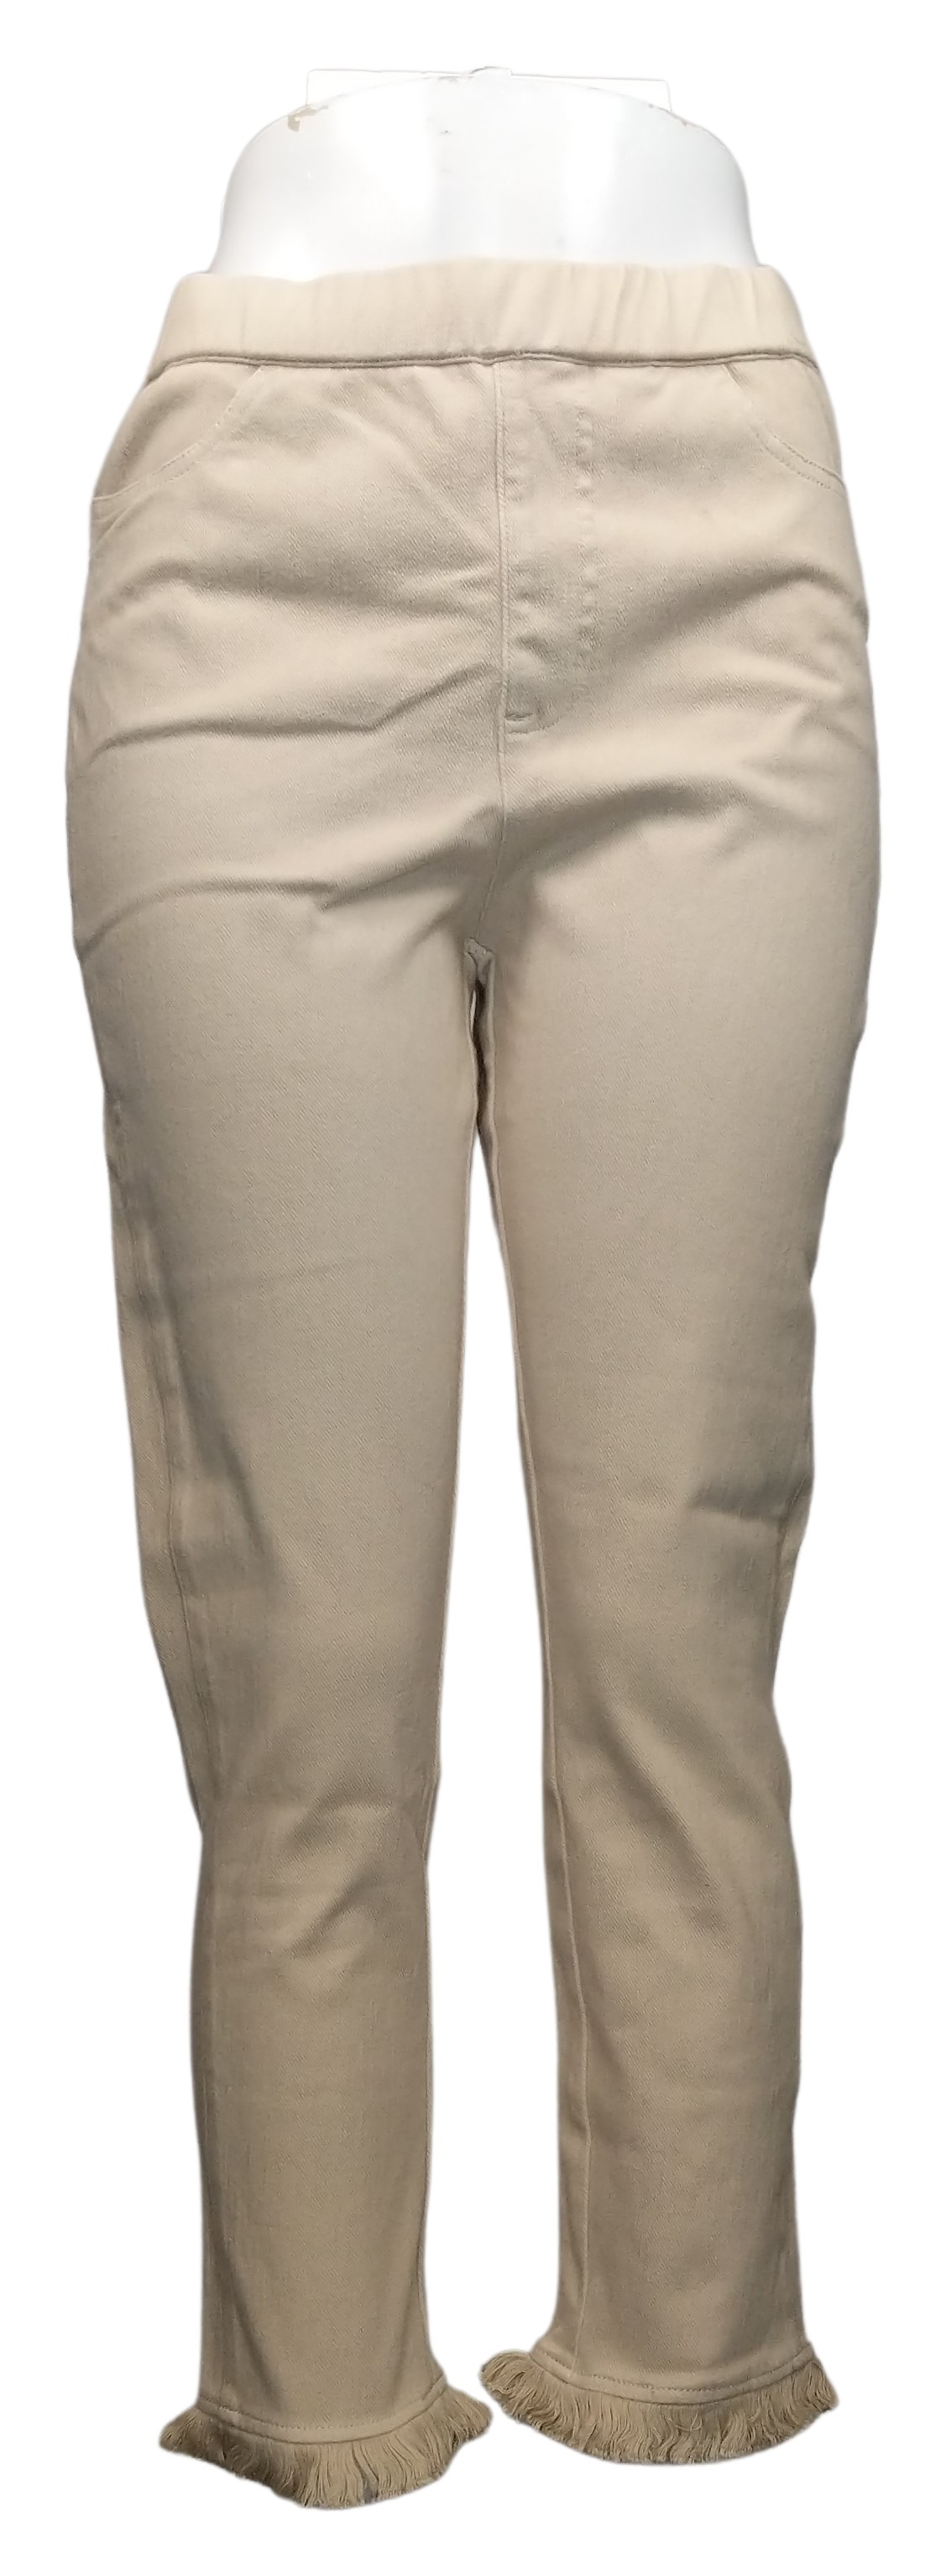 Isaac Mizrahi Live! Women's Pants Sz 8 Knit Denim Crop Jean with Beige A574241